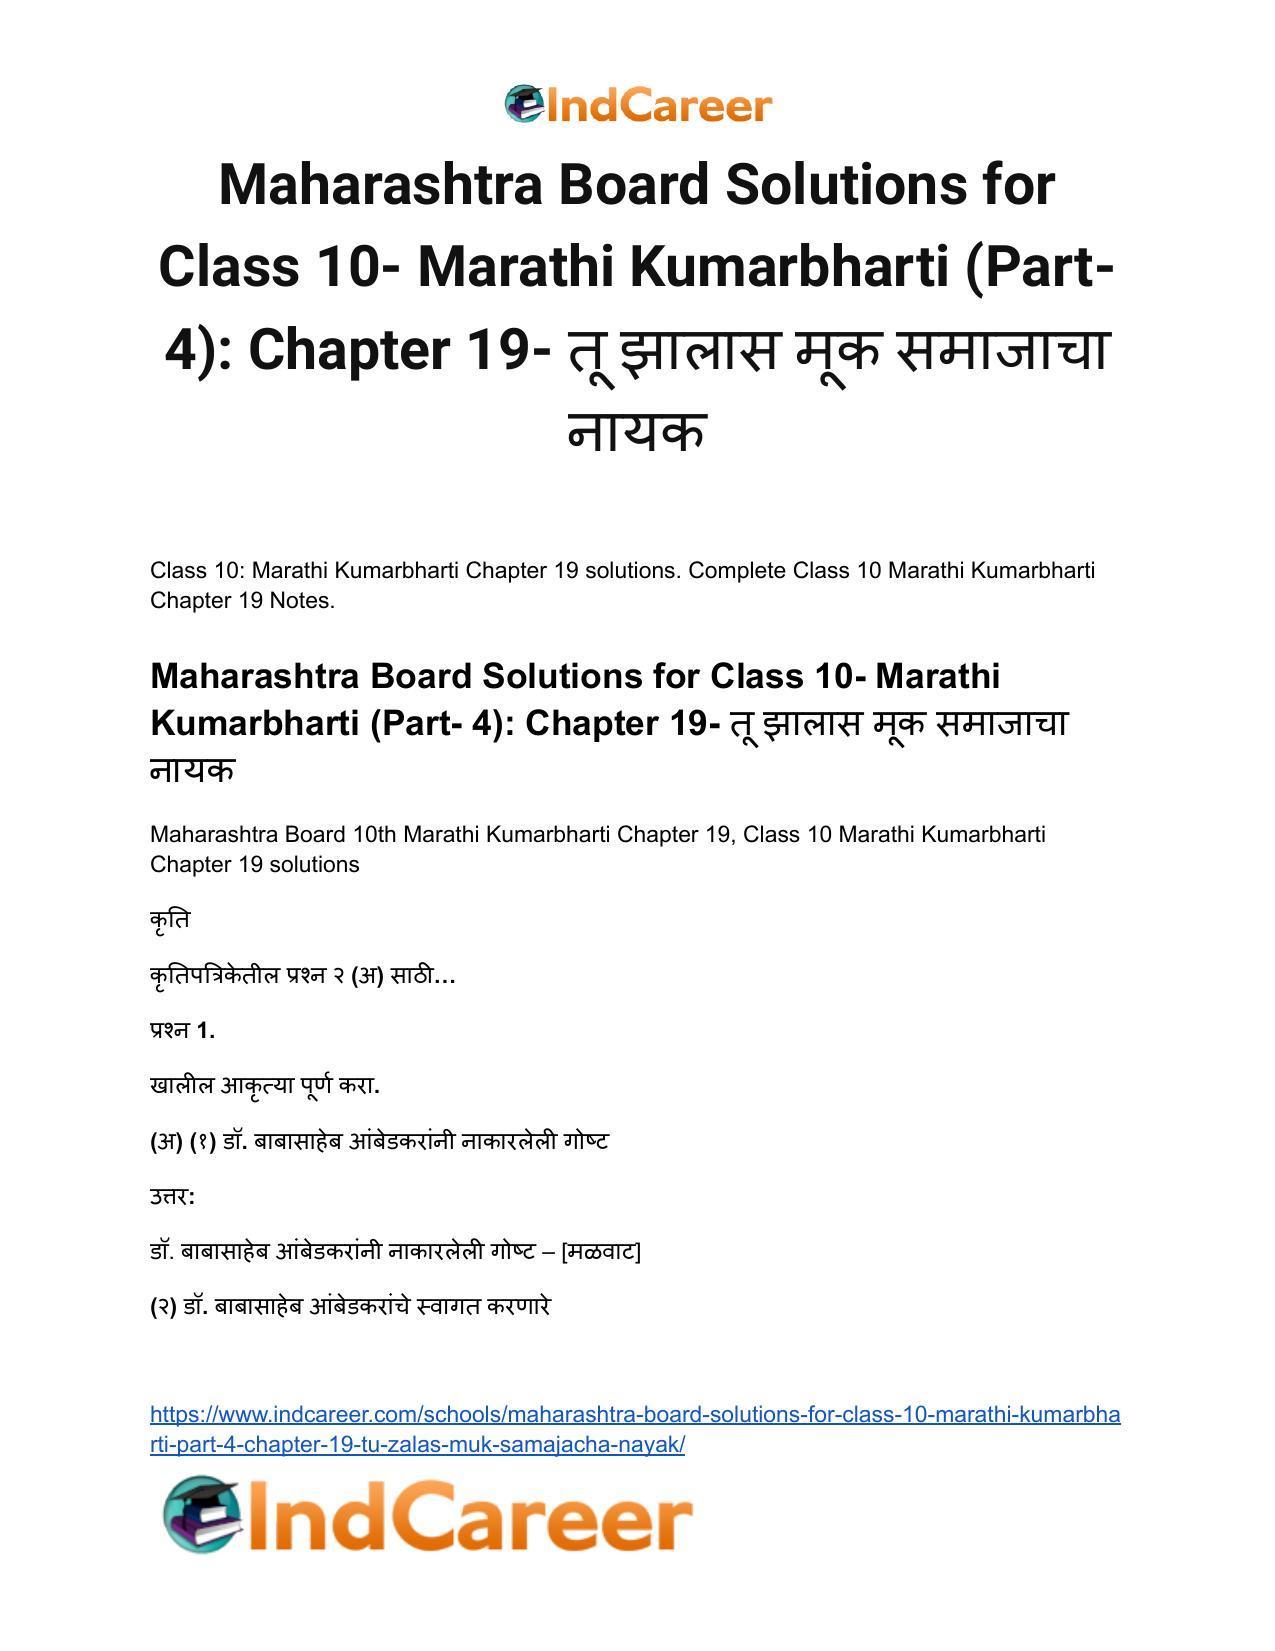 Maharashtra Board Solutions for Class 10- Marathi Kumarbharti (Part- 4): Chapter 19- तू झालास मूक समाजाचा नायक - Page 2